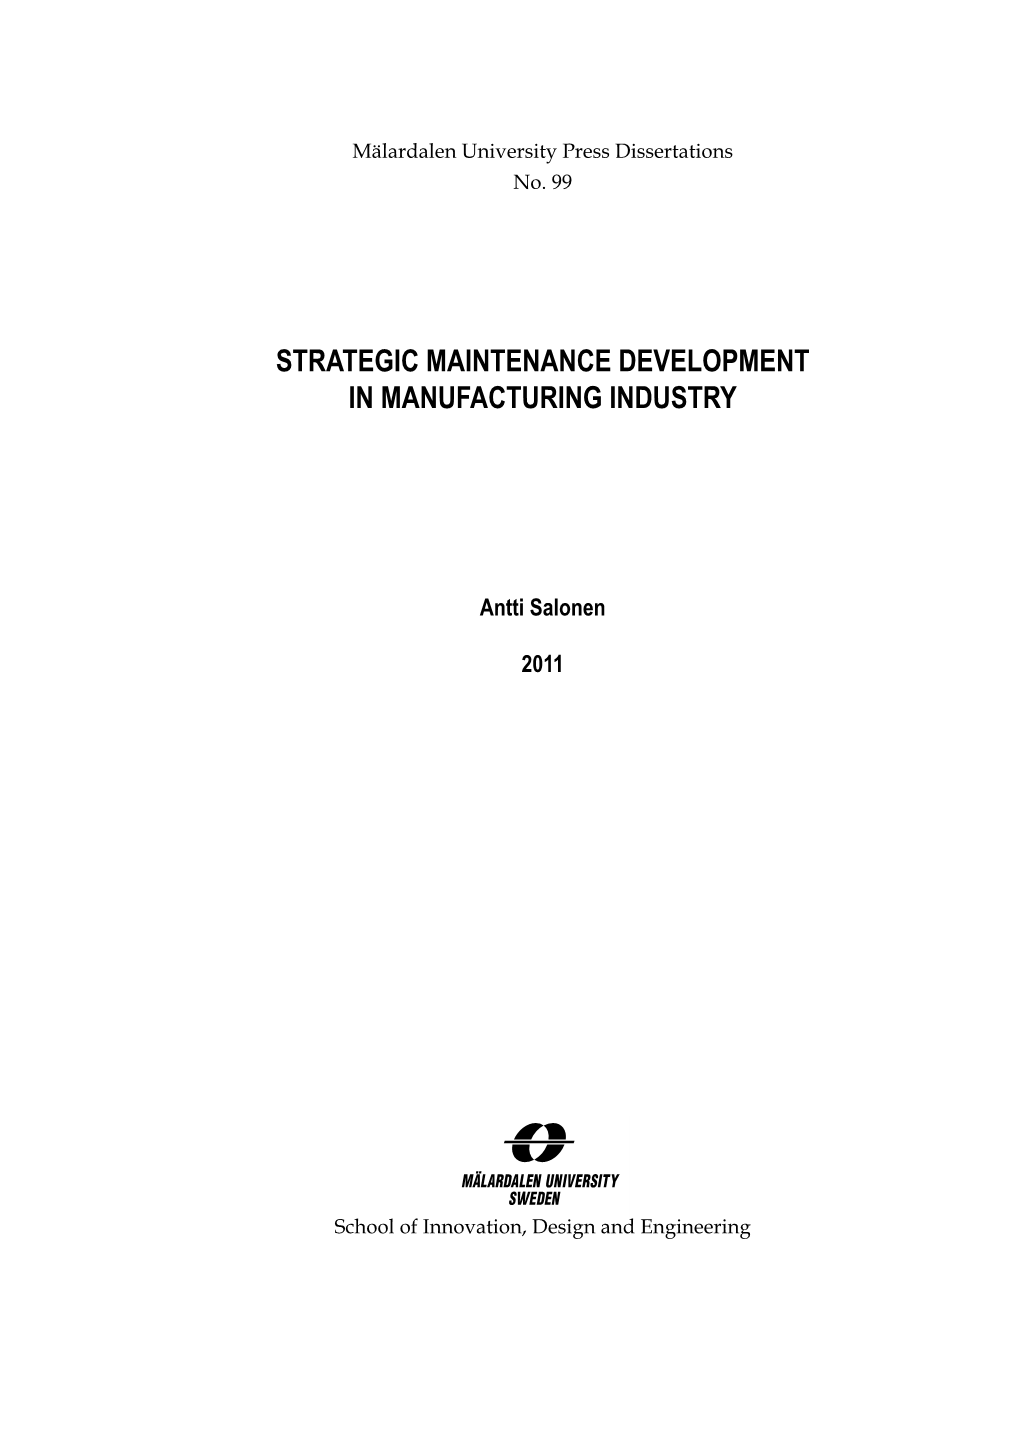 Strategic Maintenance Development in Manufacturing Industry